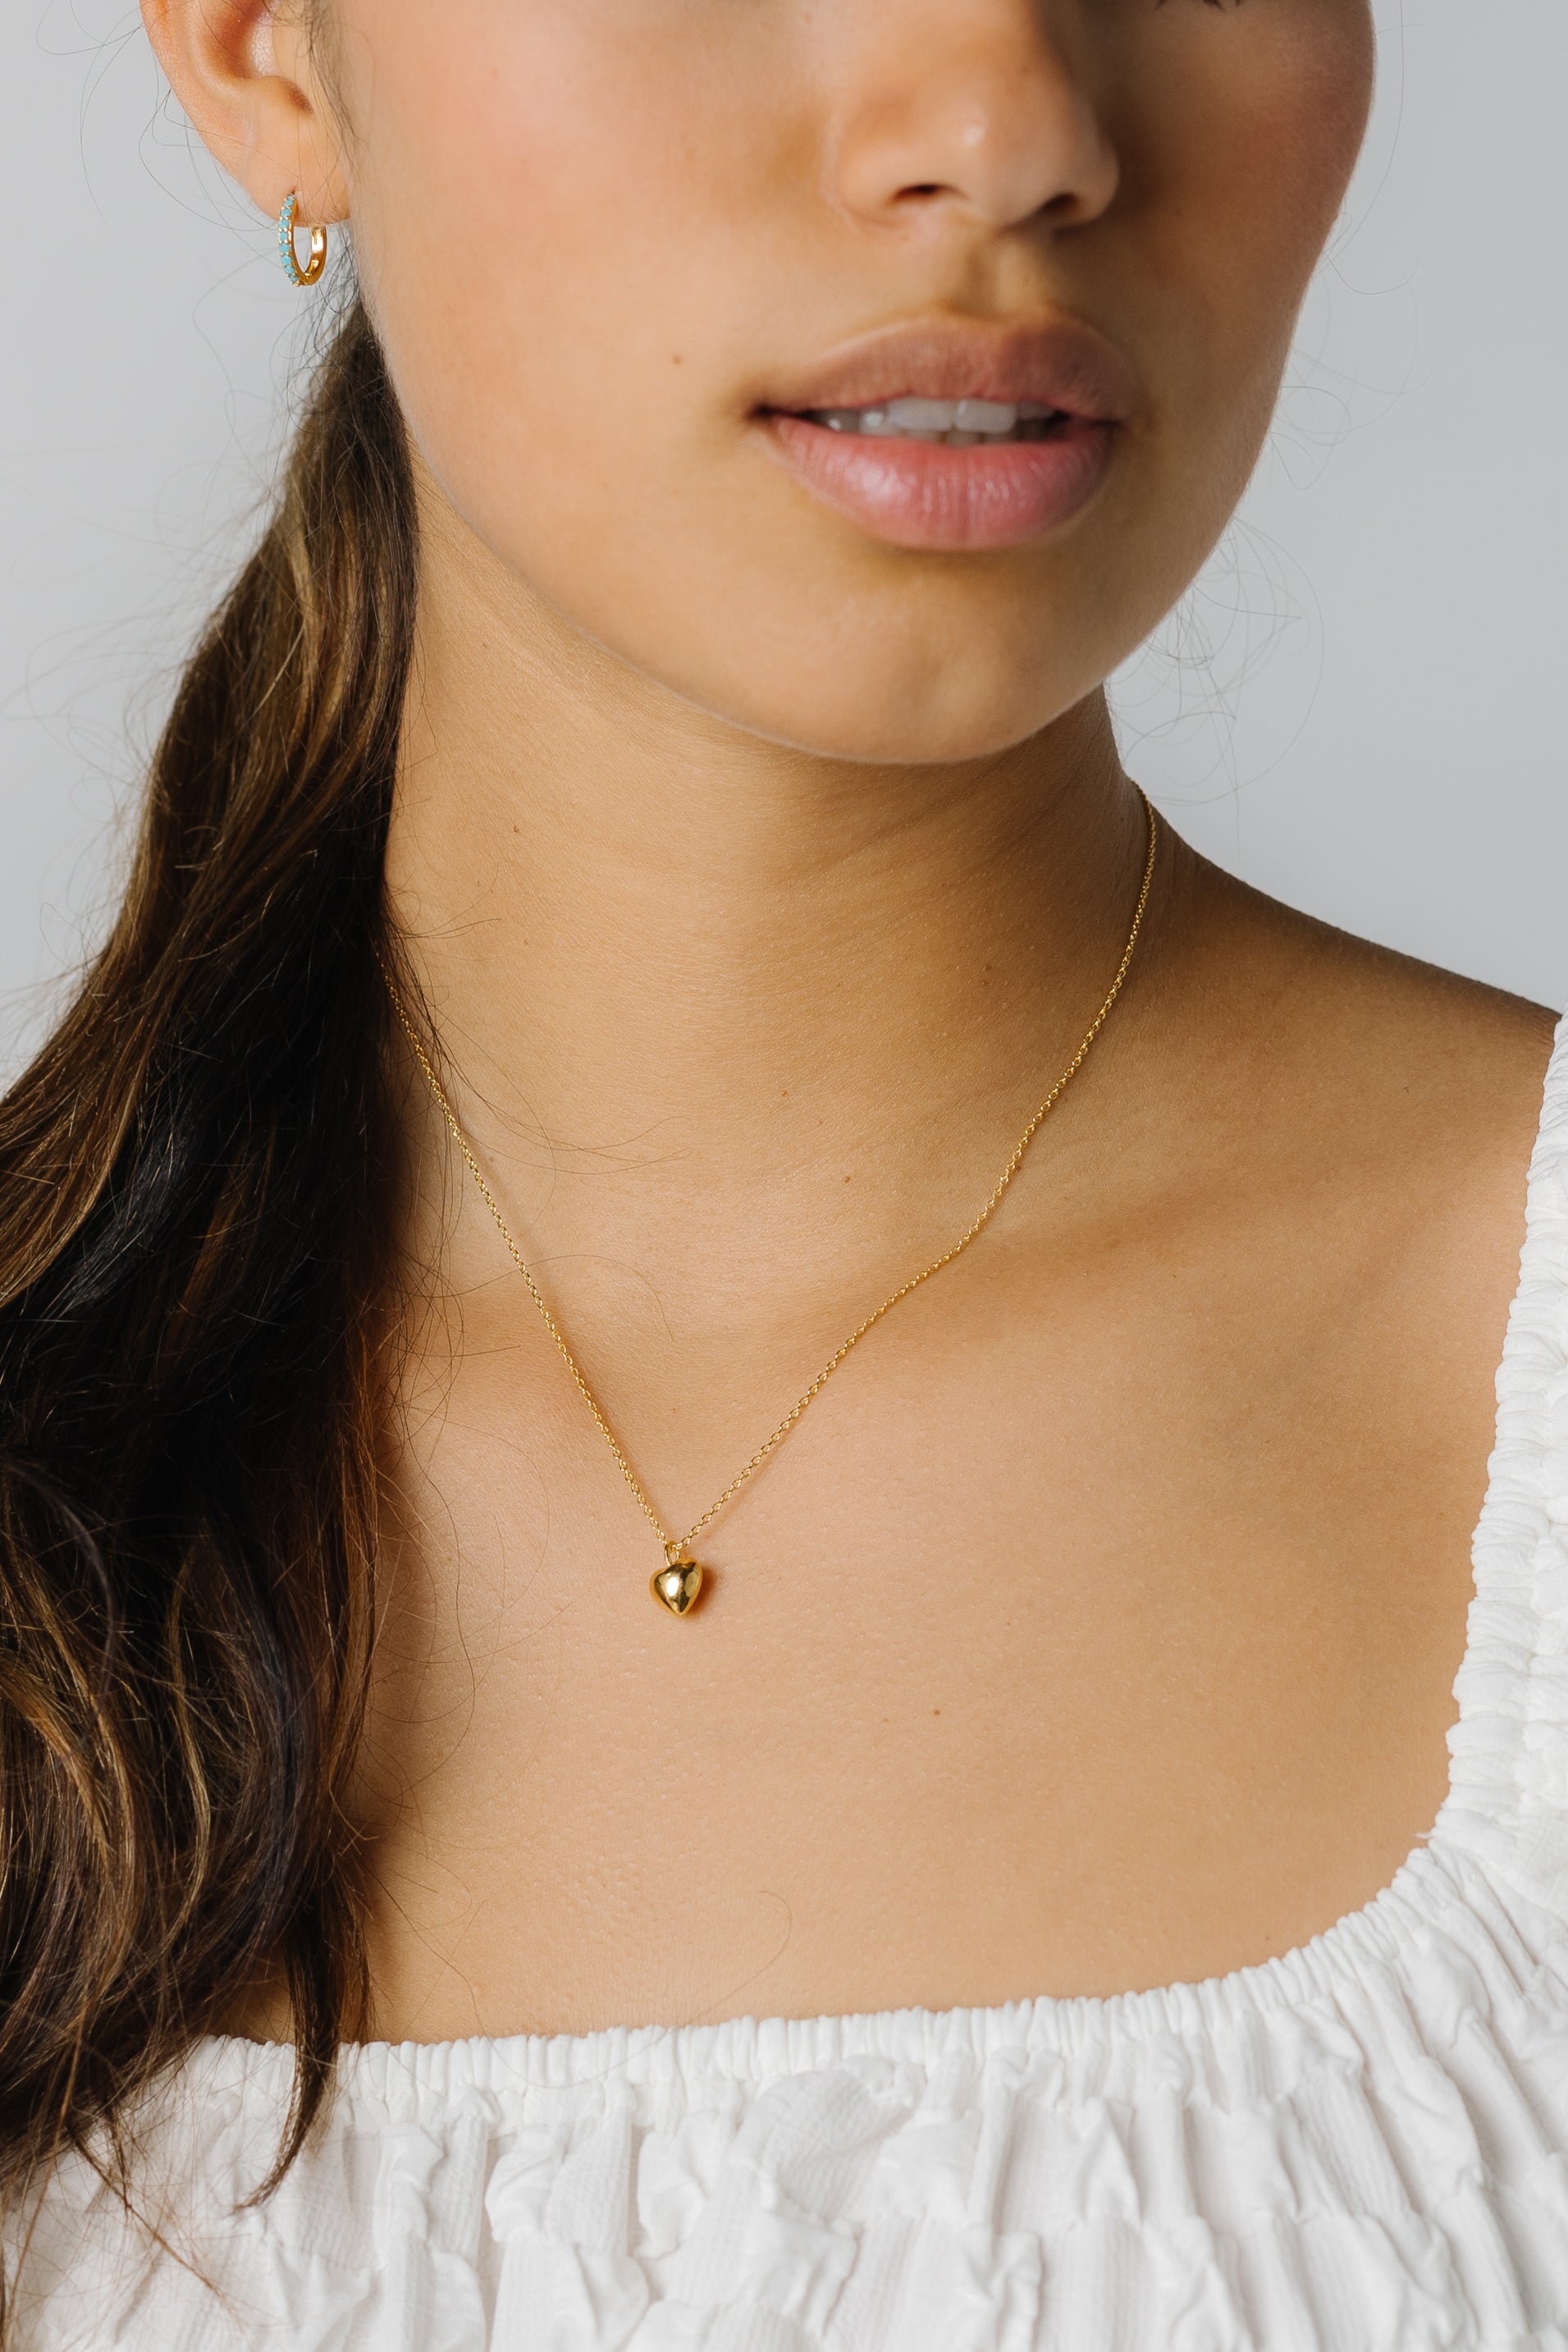 Cove Solid Petite Heart Necklace WOMEN'S NECKLACE Cove Accessories 